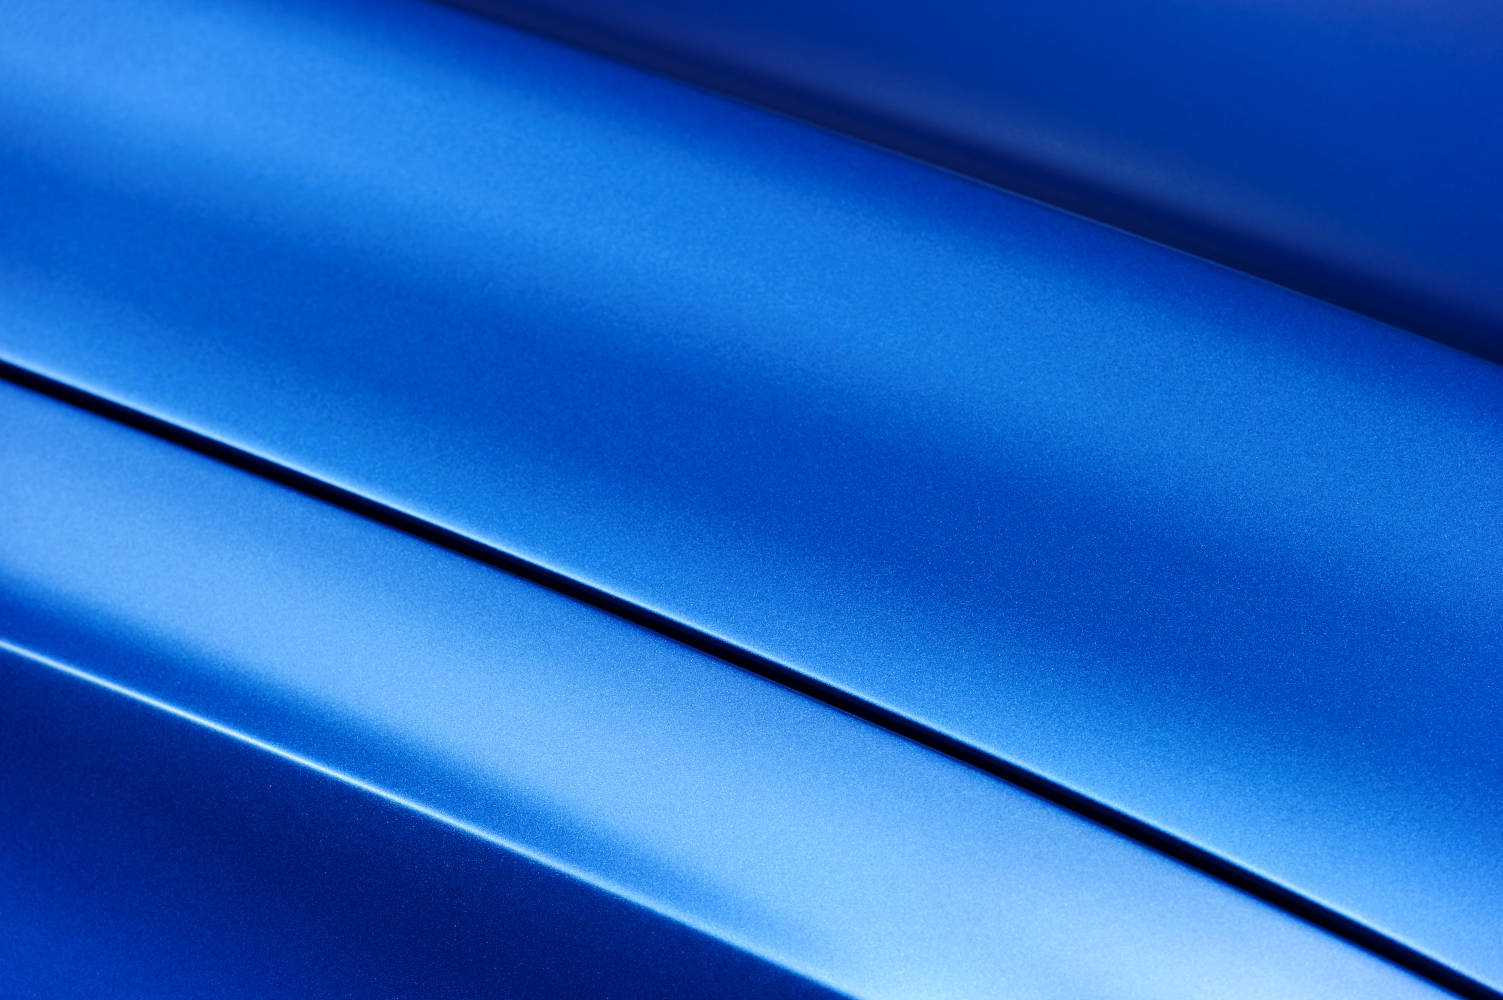 Steel railing with blue powder coating